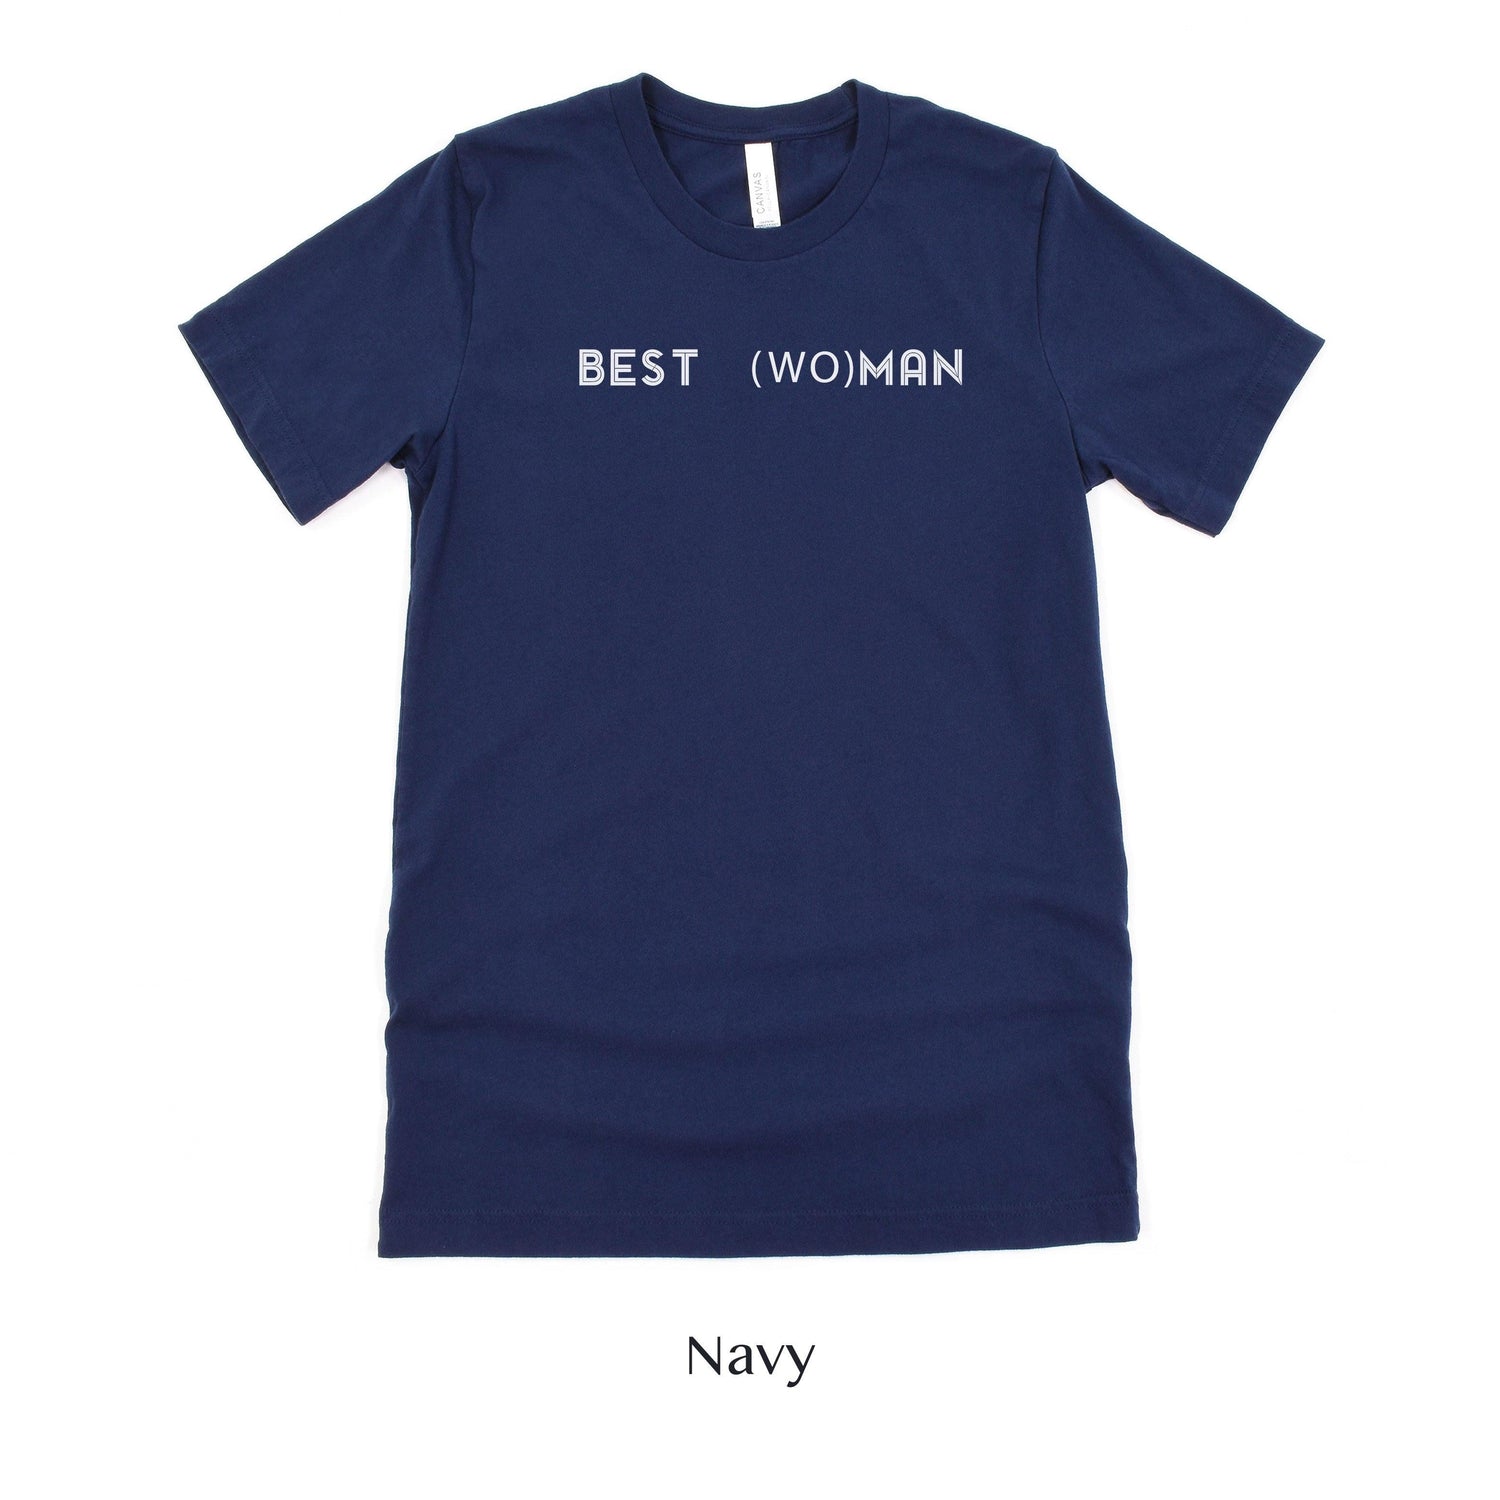 Best Woman Shirt - Matching Wedding Party tshirts - Unisex t-shirt by Oaklynn Lane - navy blue shirt